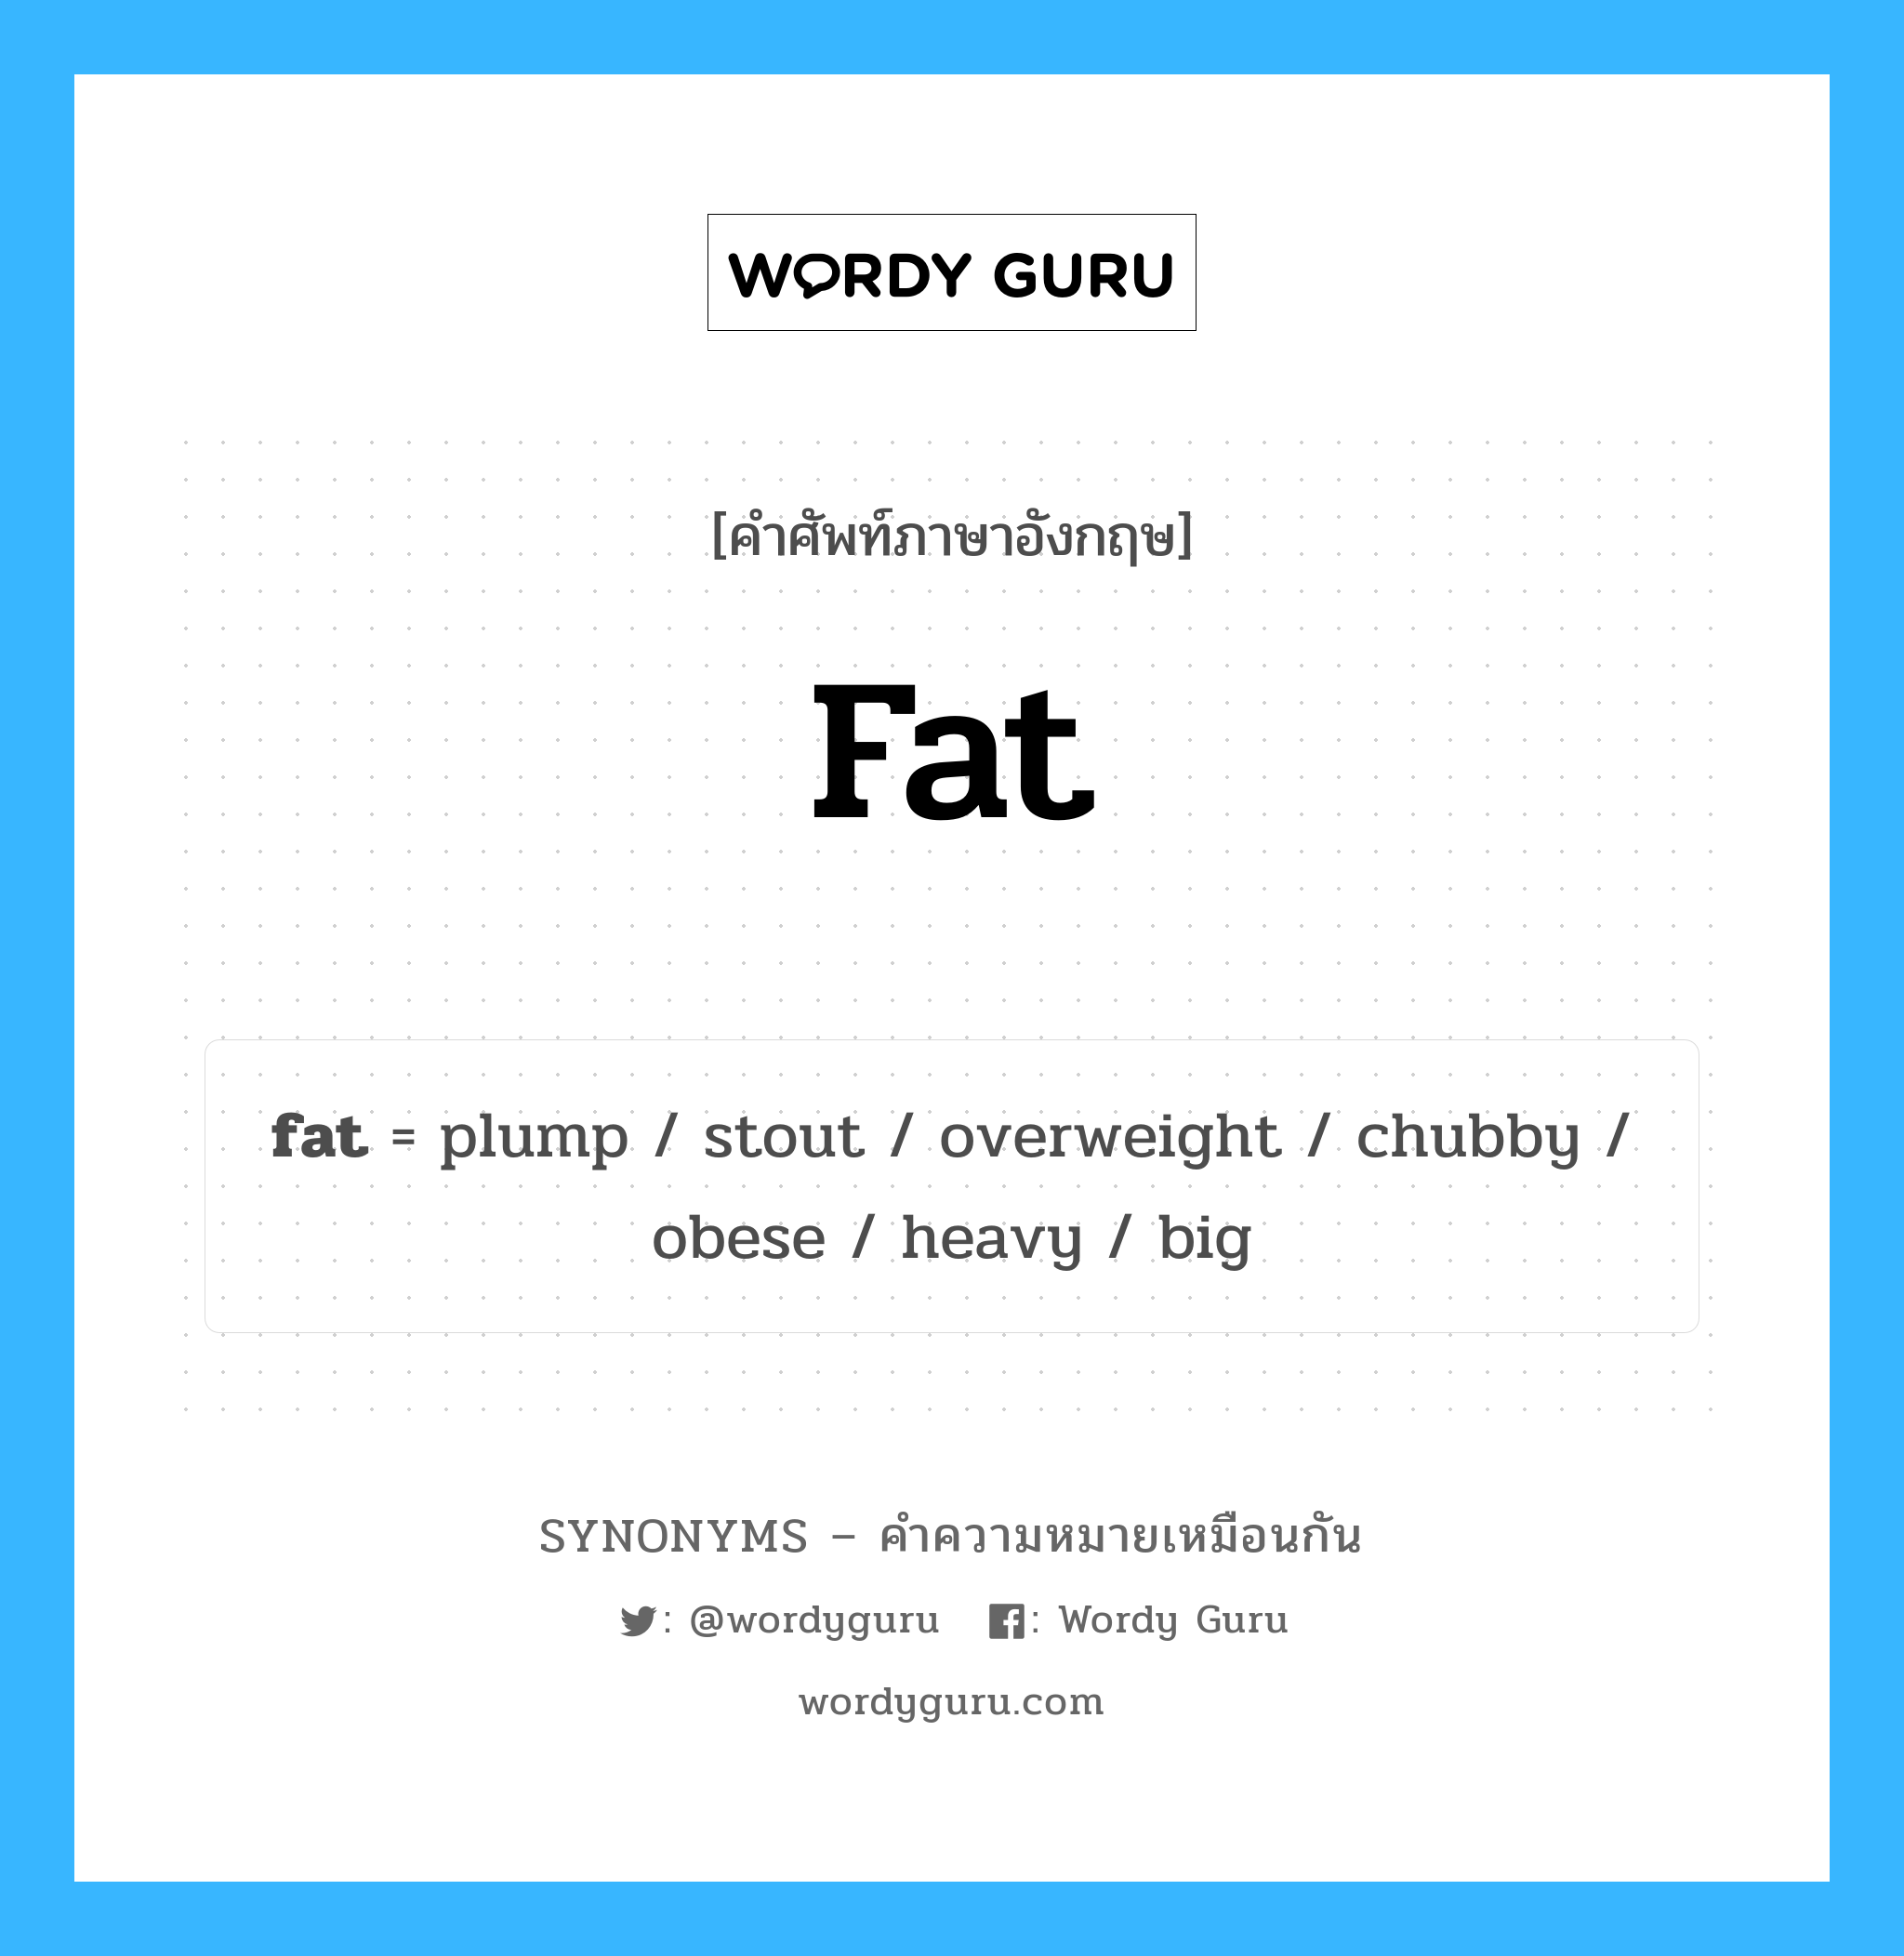 stout เป็นหนึ่งใน fat และมีคำอื่น ๆ อีกดังนี้, คำศัพท์ภาษาอังกฤษ stout ความหมายคล้ายกันกับ fat แปลว่า สเตาท์ หมวด fat